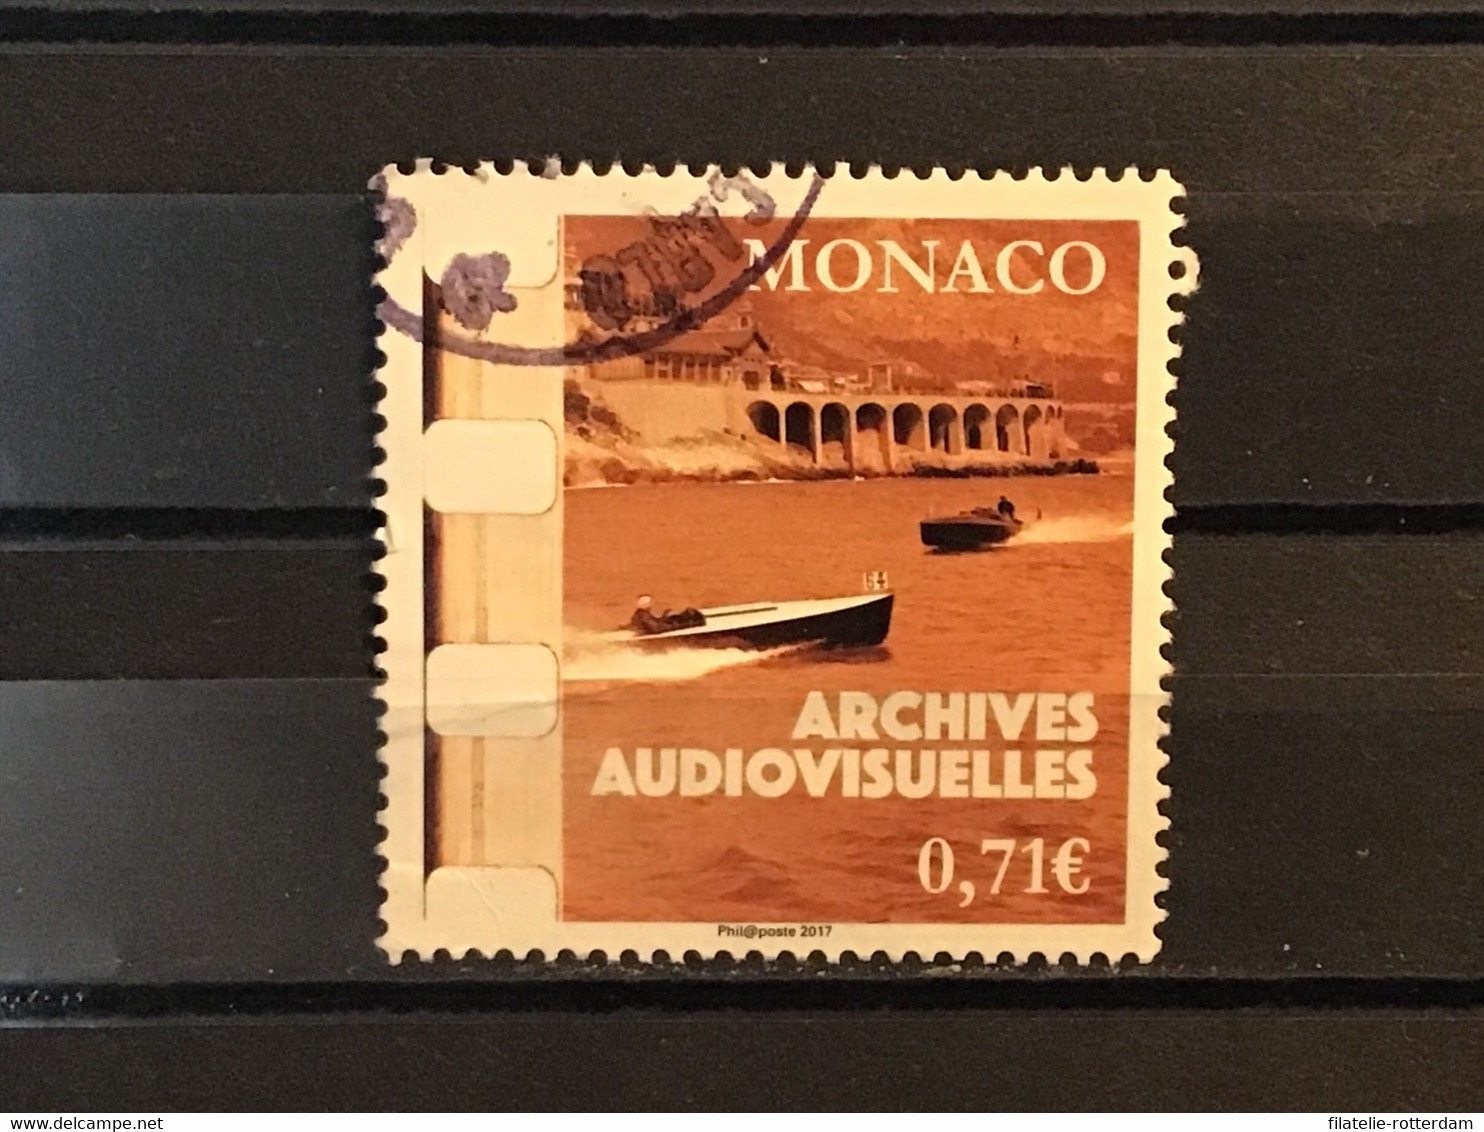 Monaco - Audiovisuele Archieven (0.71) 2017 - Usati